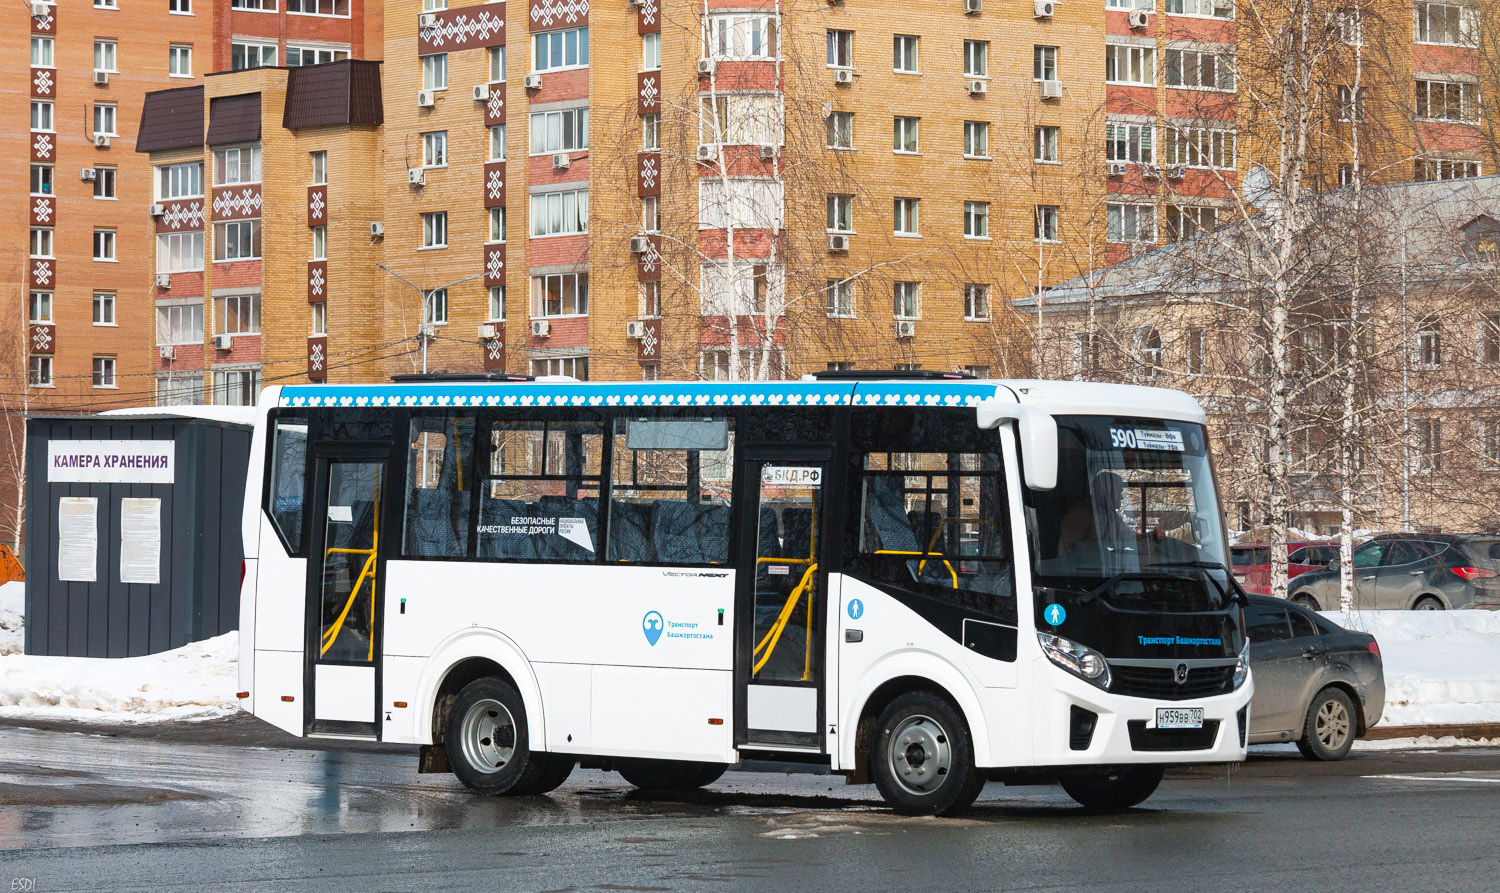 Baszkortostan, PAZ-320405-04 "Vector Next" Nr Н 959 ВВ 702; Baszkortostan — Presentation of new buses for Bashavtotrans